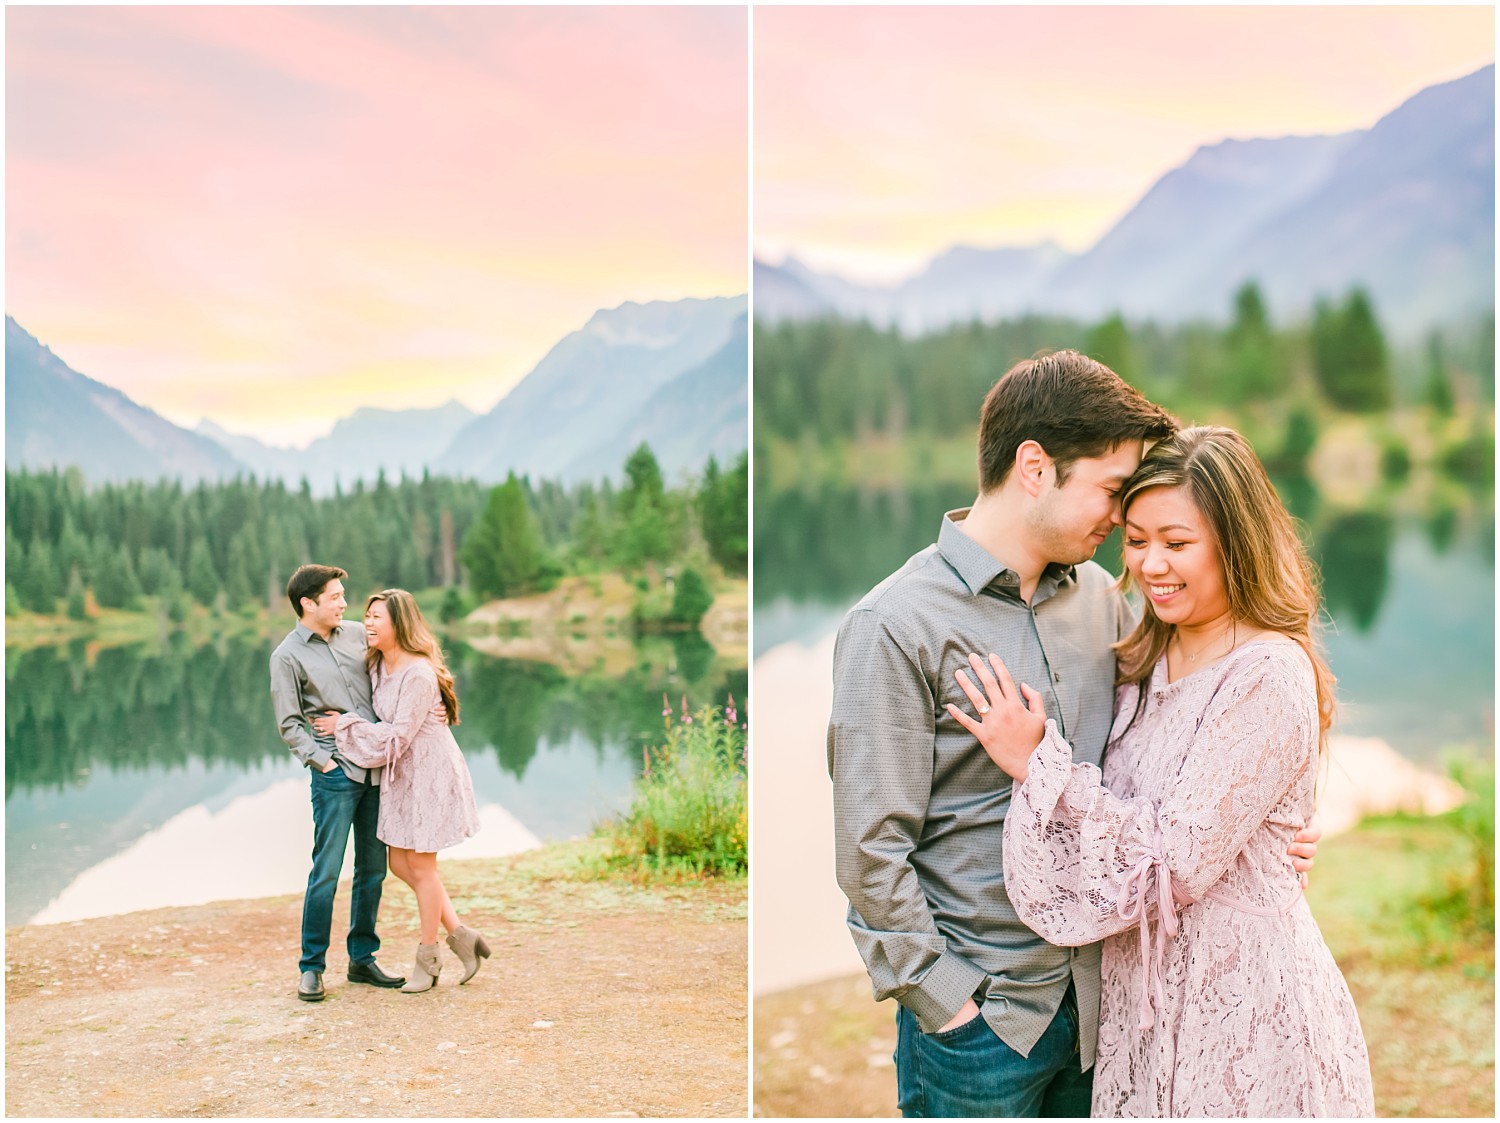 Sunrise Gold Creek Pond Engagement | Cameron & Rachel